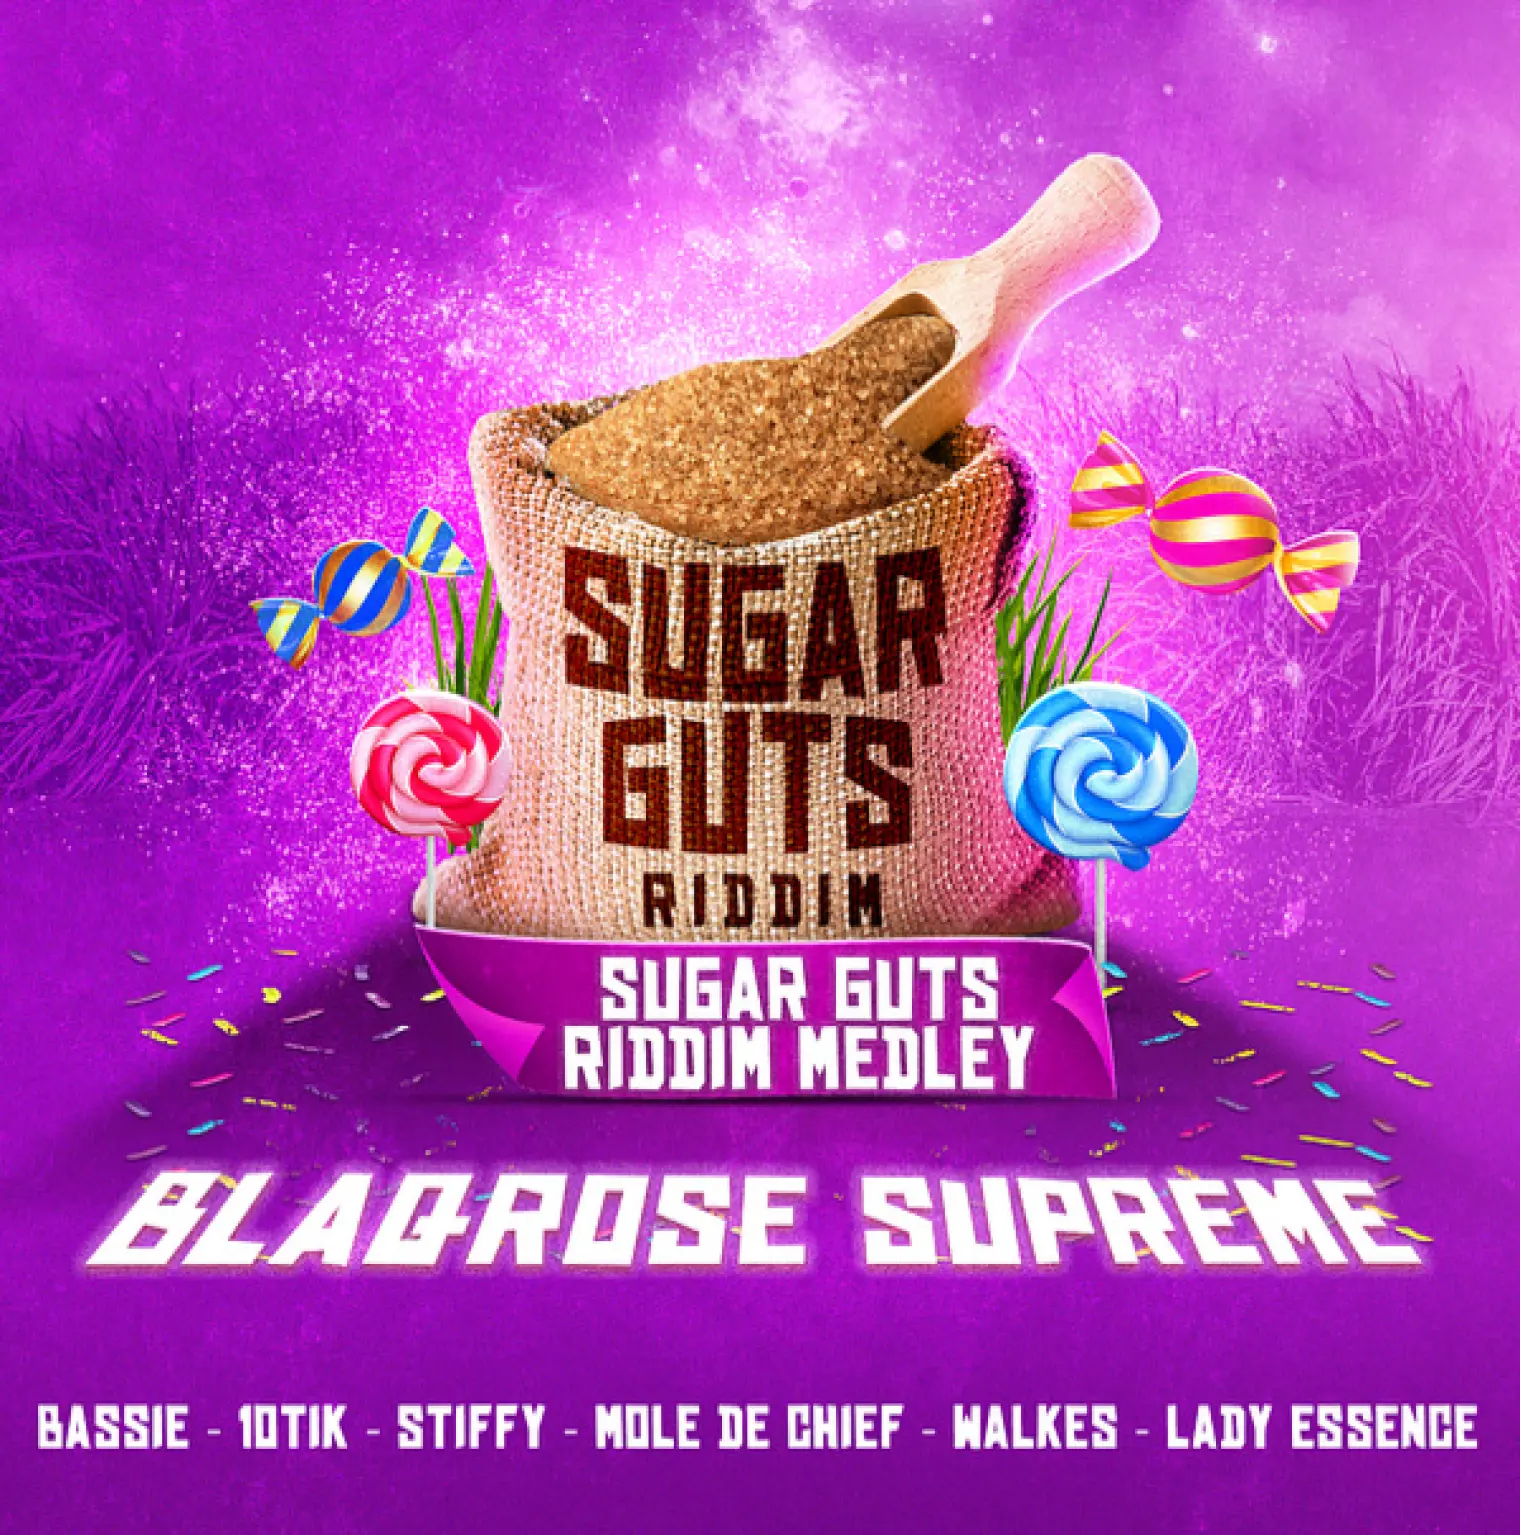 Sugar Guts Riddim Medley (Blaqrose Supreme) -  Bassie 